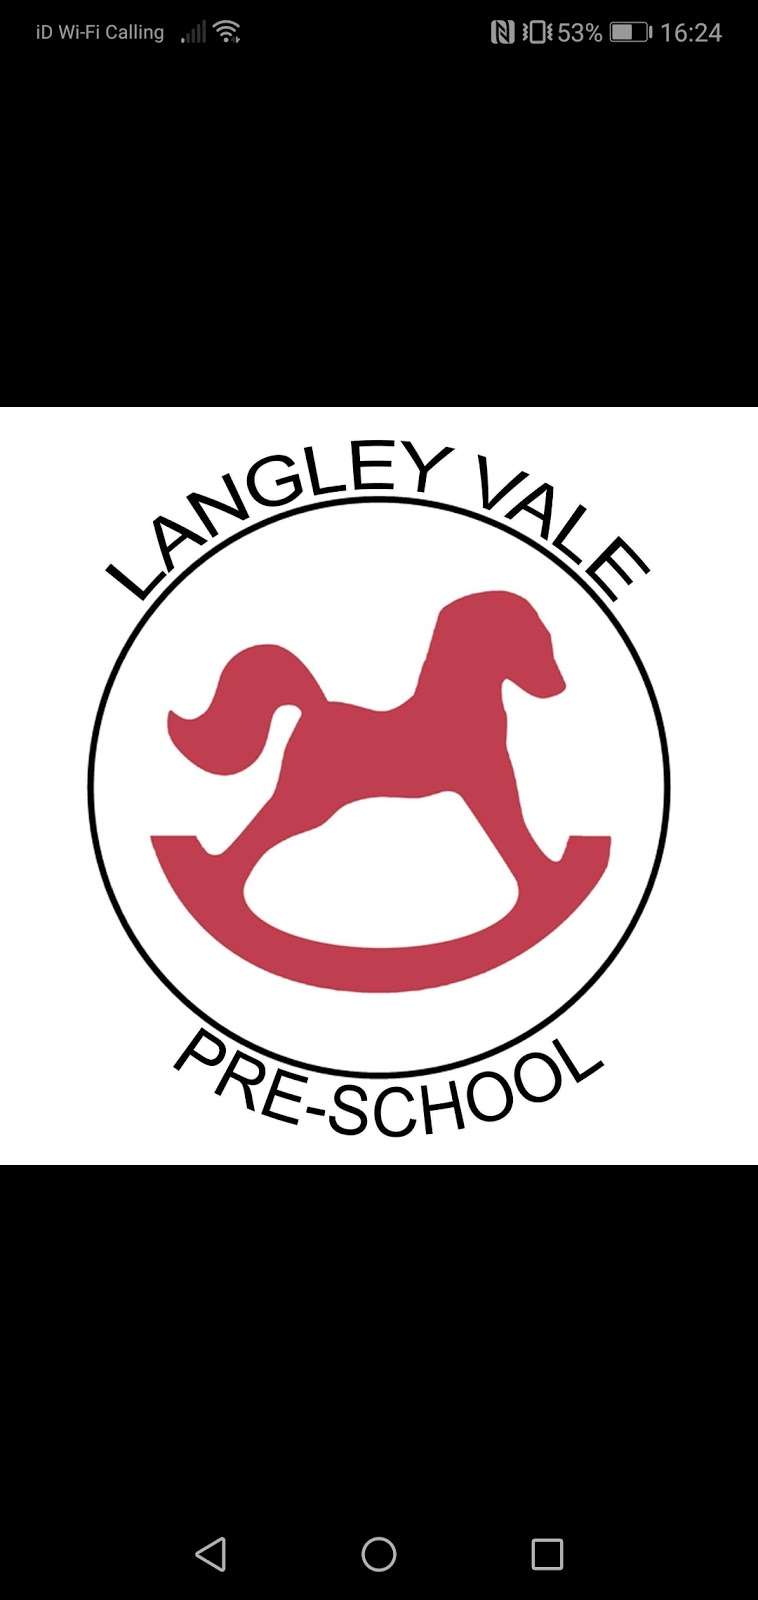 Langley vale pre-school | The village Hall, Rosebery Rd, Epsom KT18 6AB, UK | Phone: 07932 866976